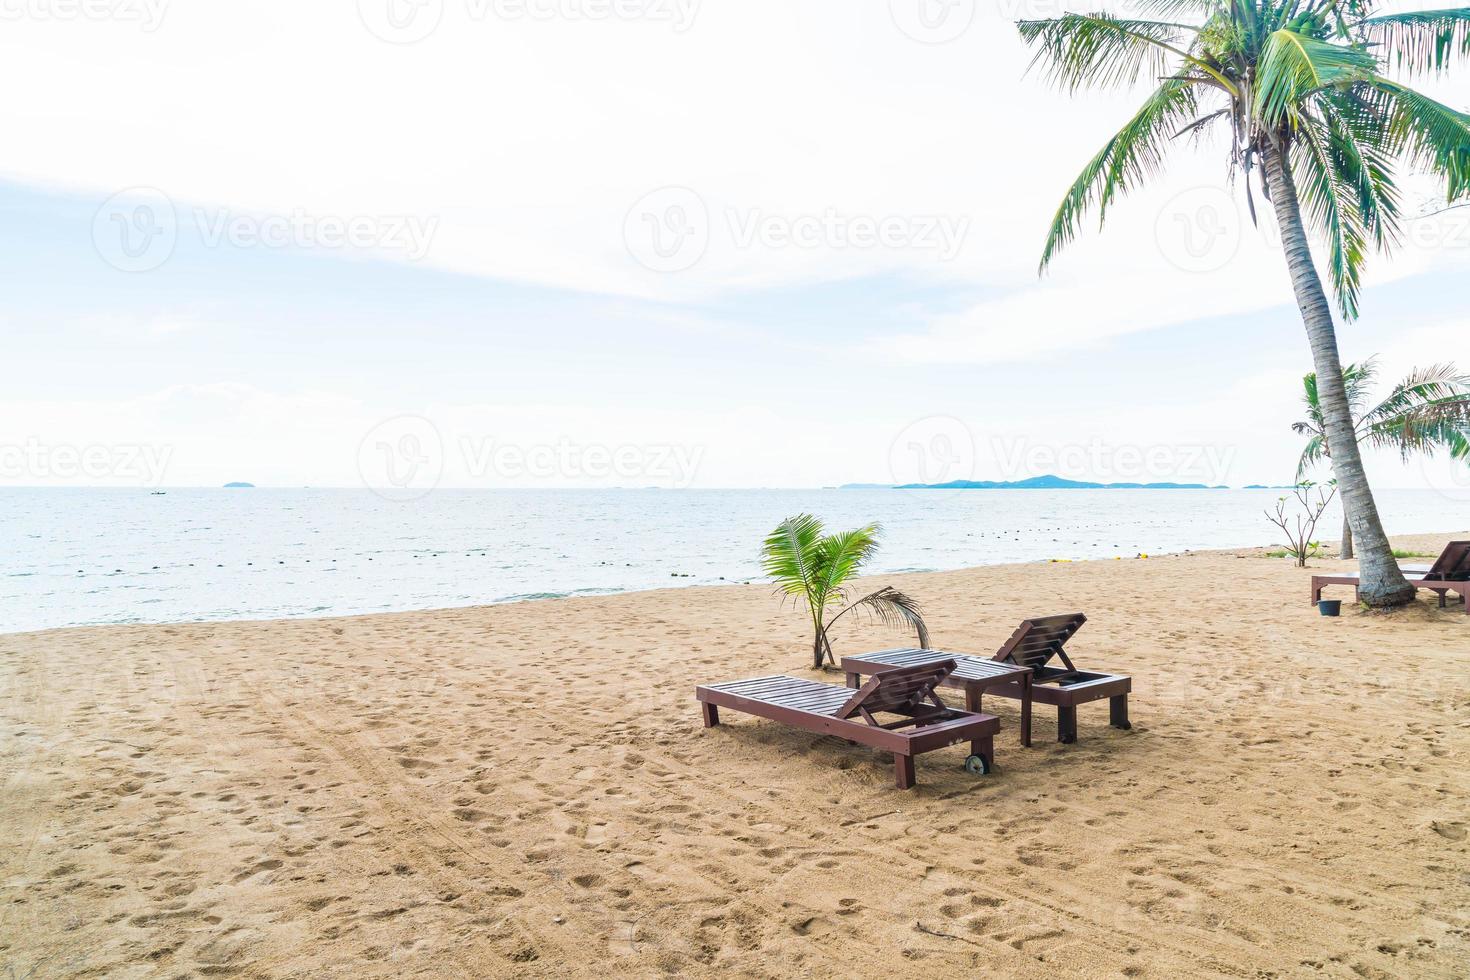 Island Paradise Beach stol bakgrund foto